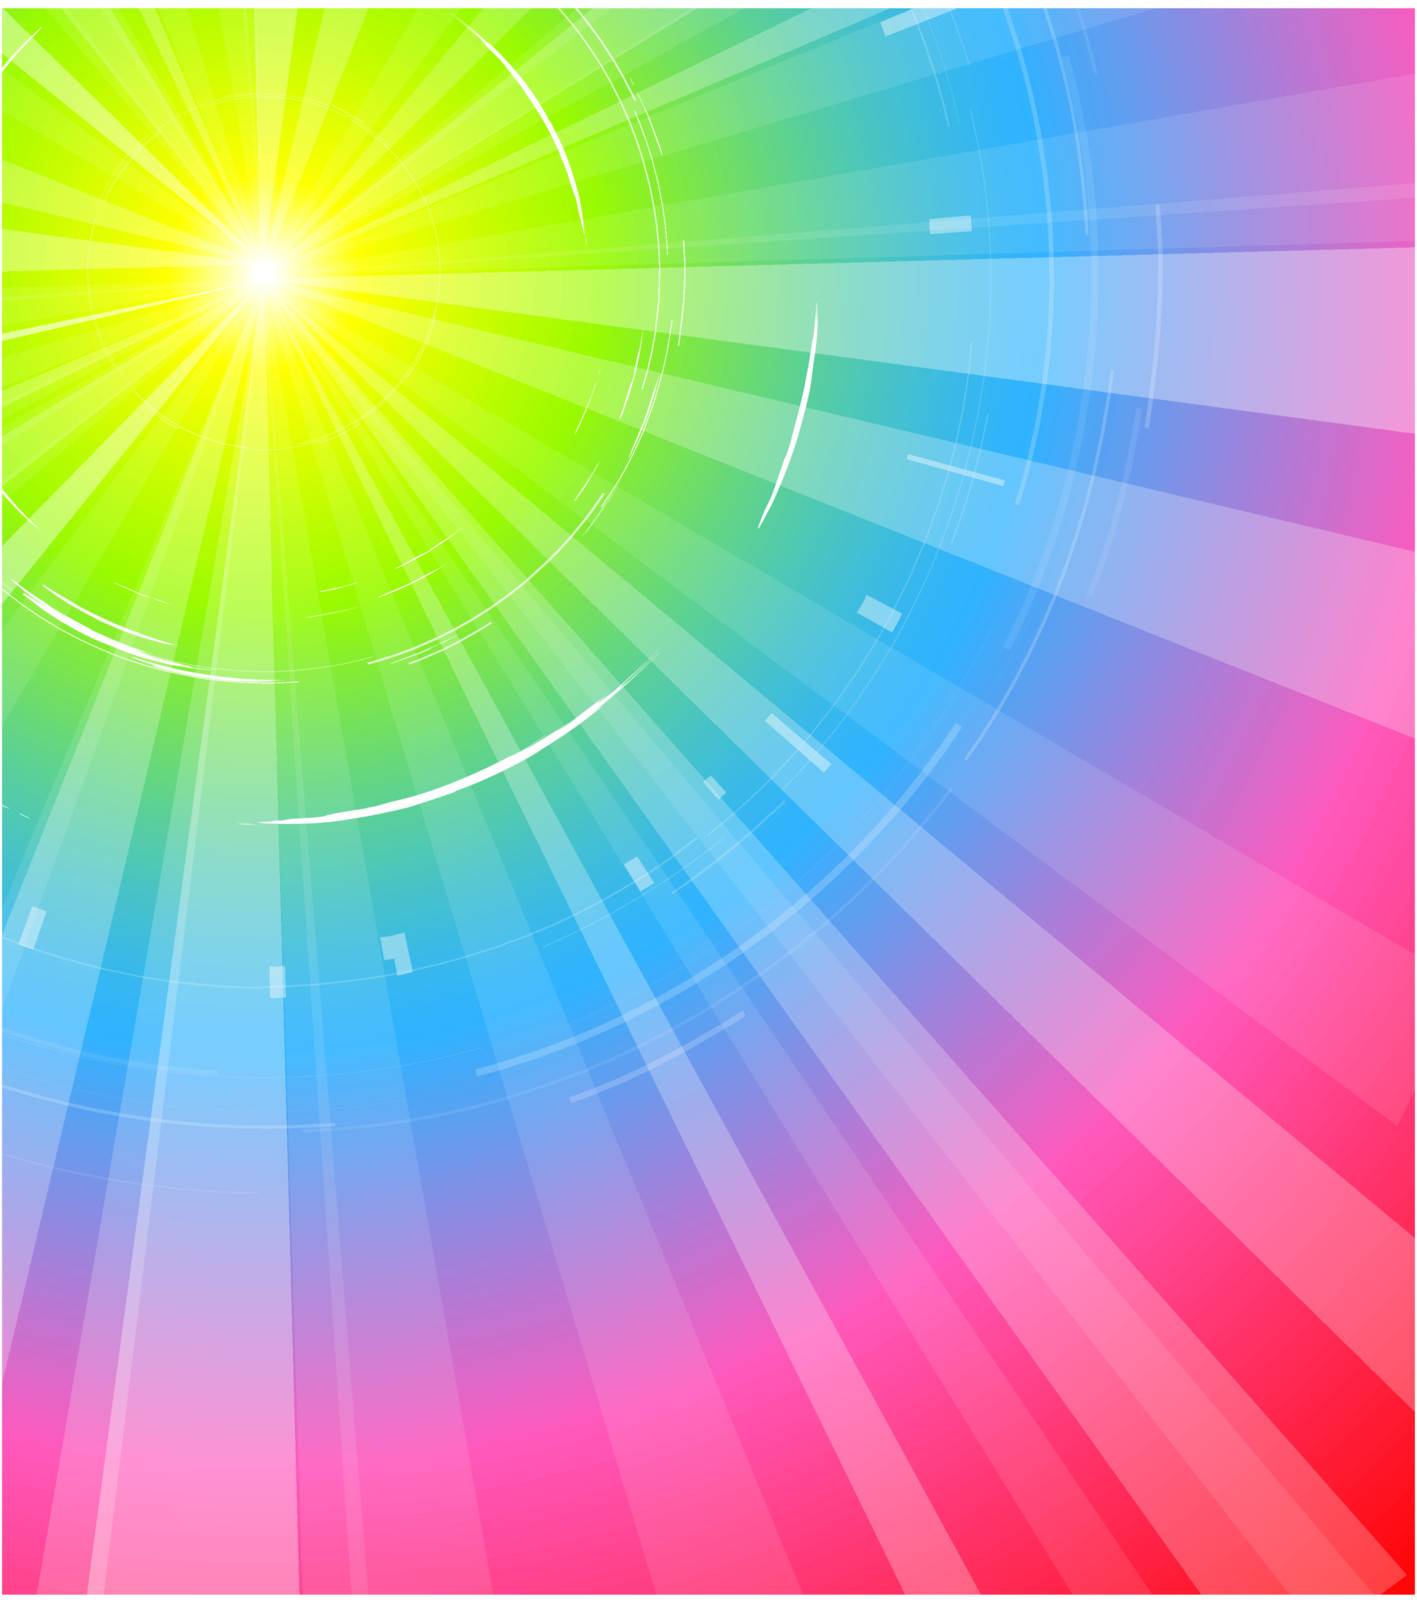 Sun in the rainbow - abstract background illustration